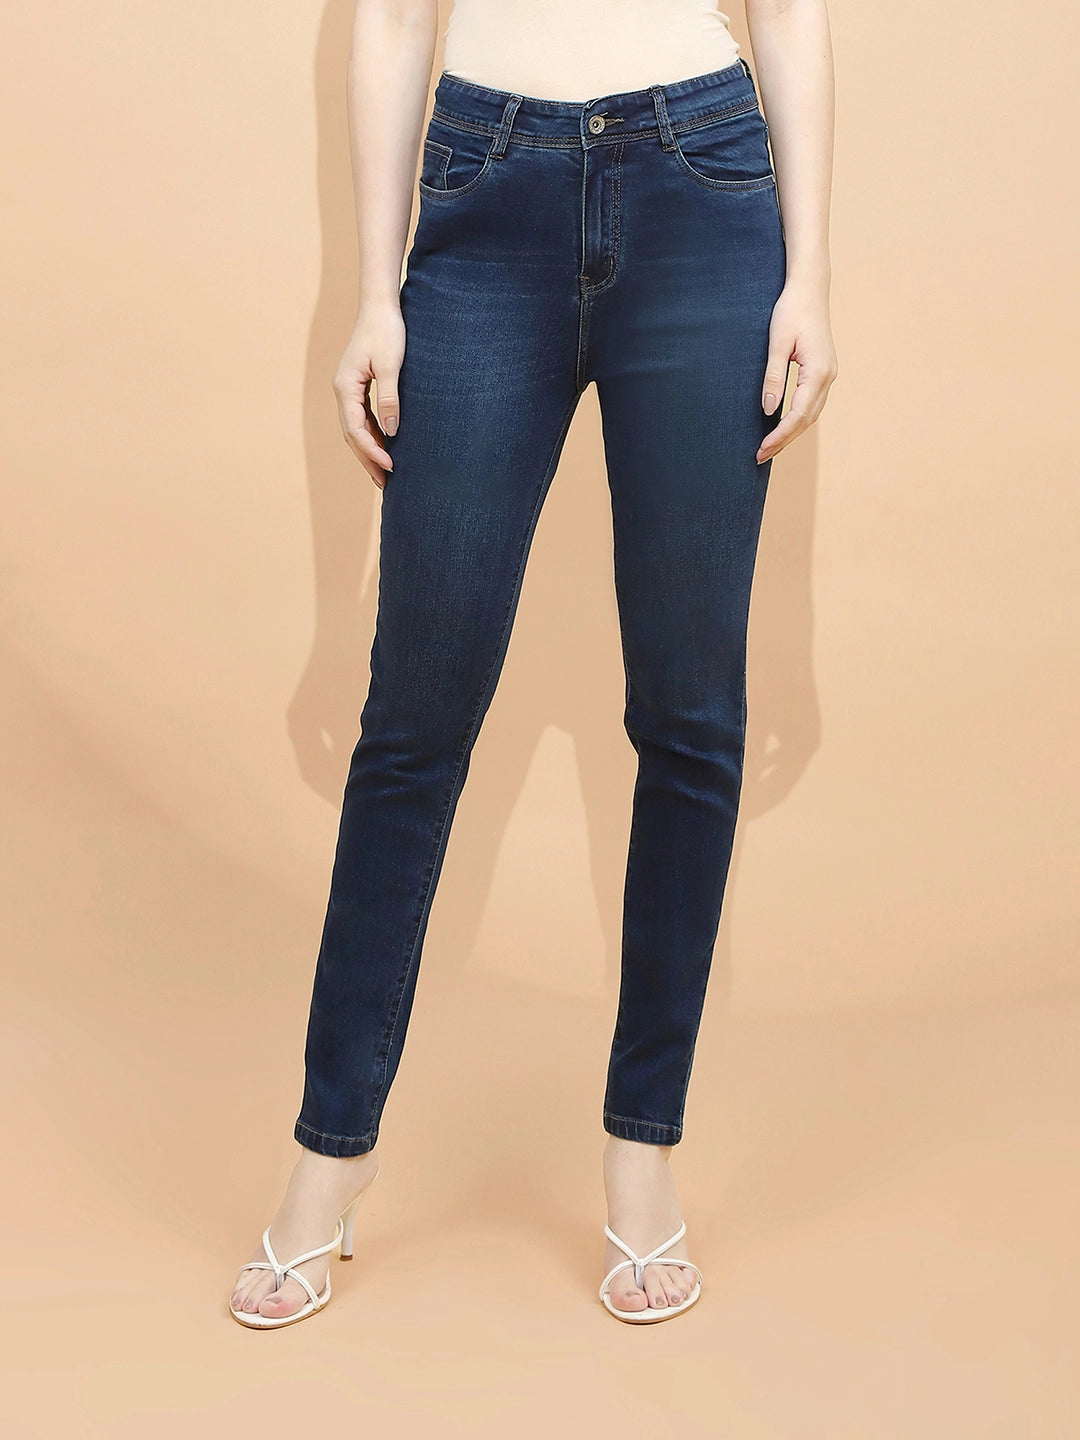 Tint Cotton Blend Slim Fit Jeans For Women